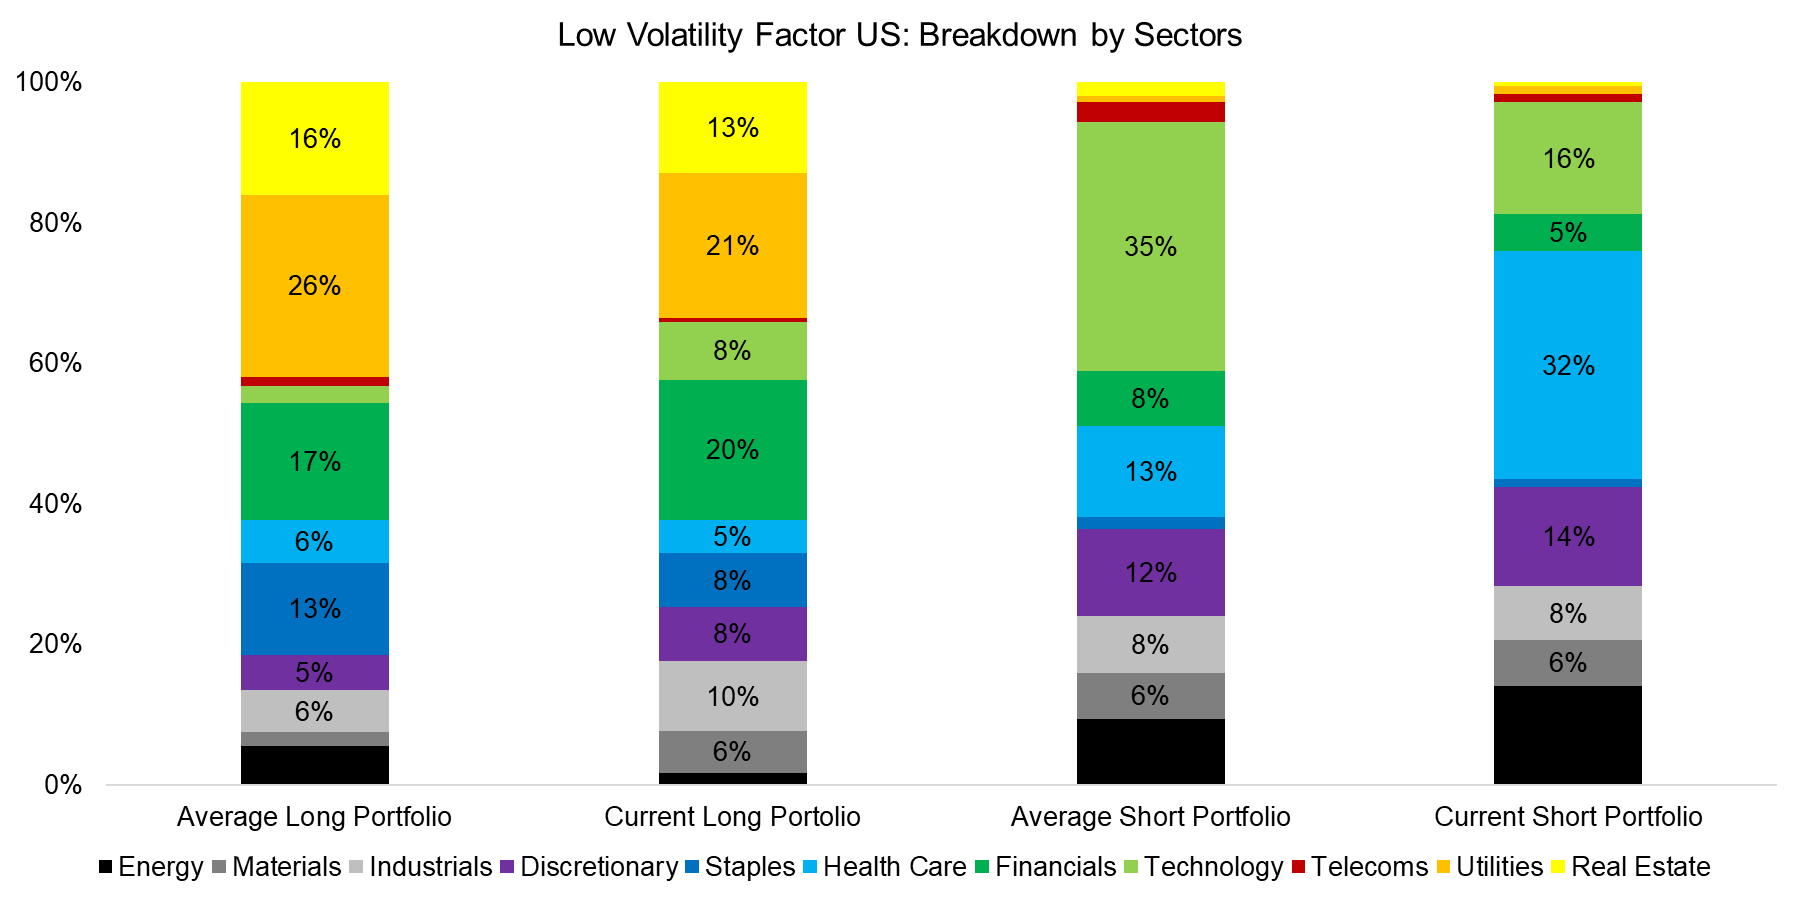 Low Vol Factor US - Breakdown by Sectors